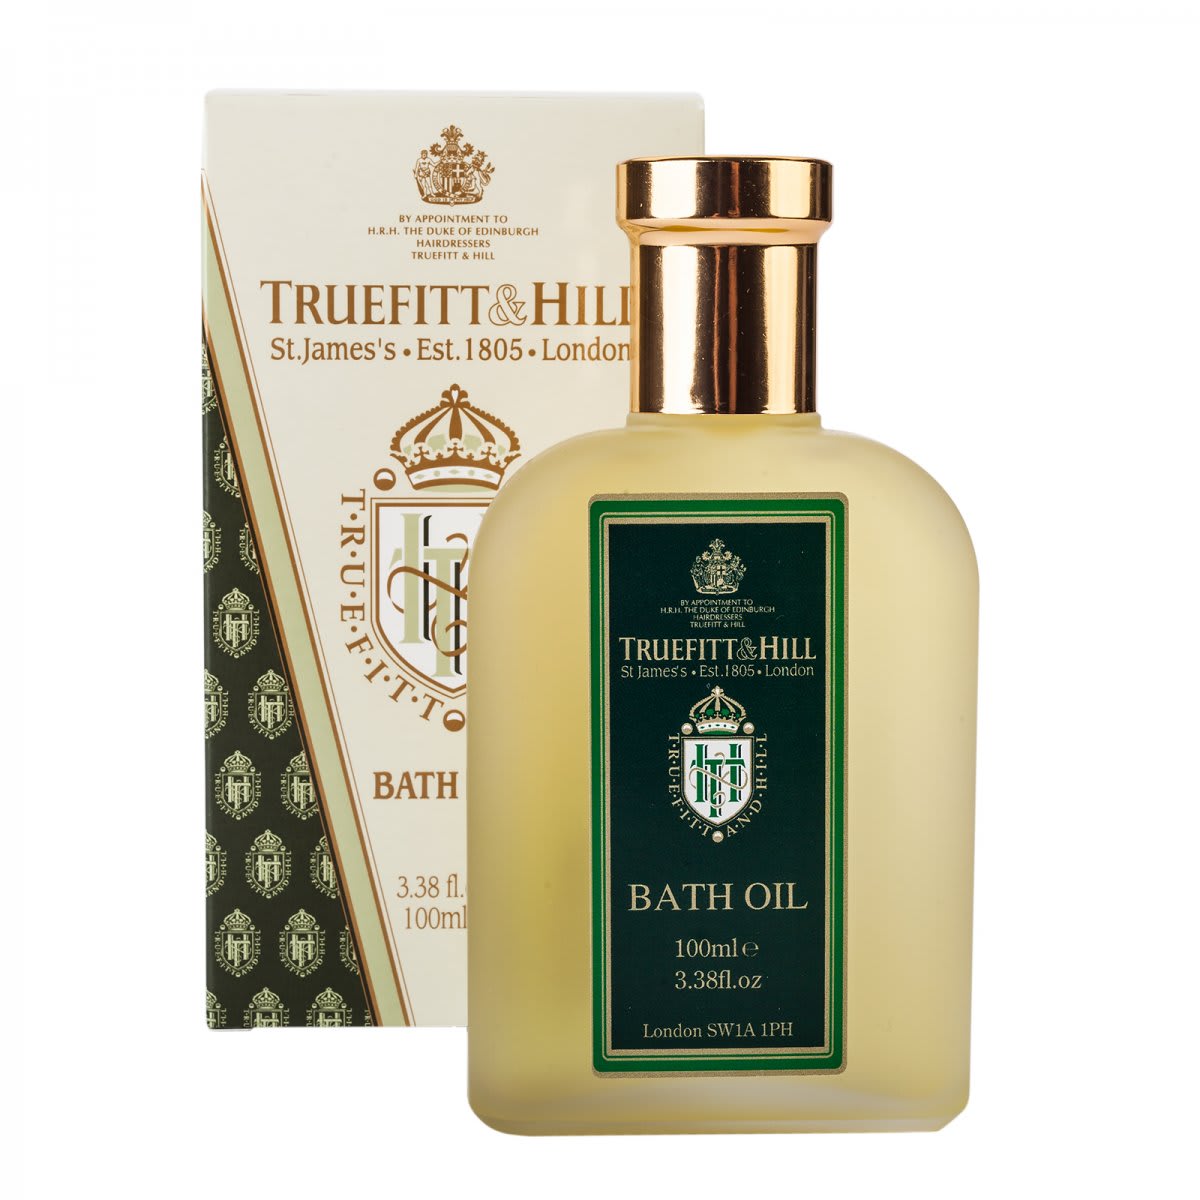 Truefitt & Hill Bath Oil